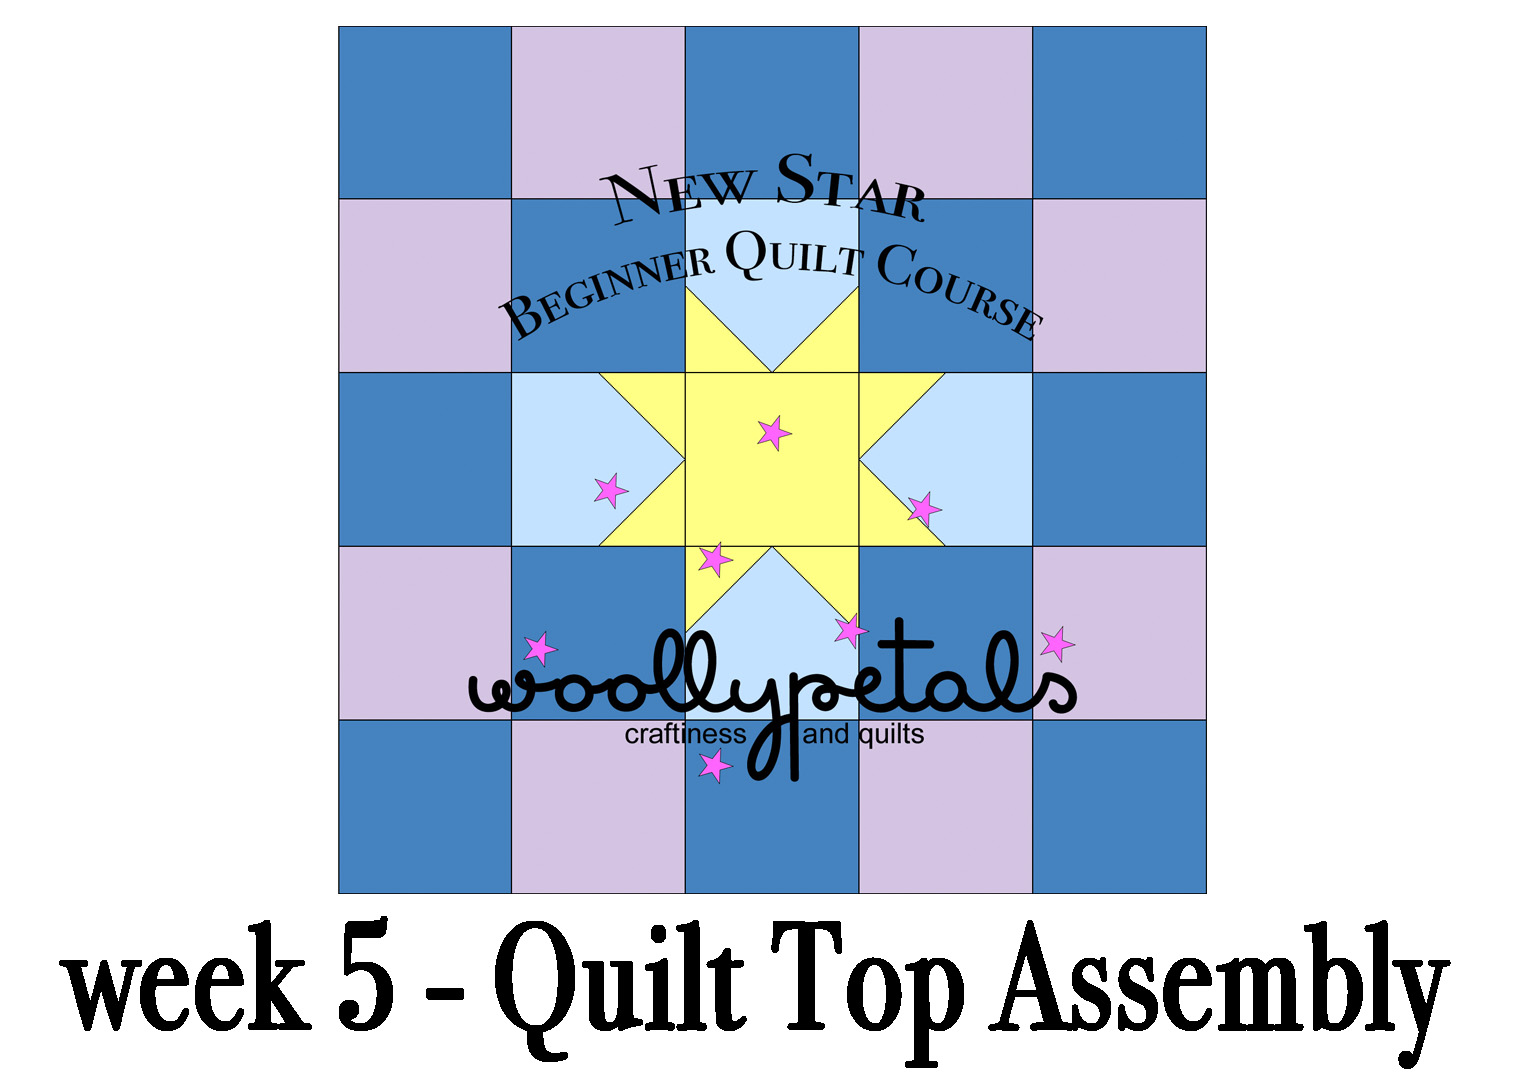 woollypetals Week 5 - Quilt Top Assembly New Star Beginner Quilt Course.